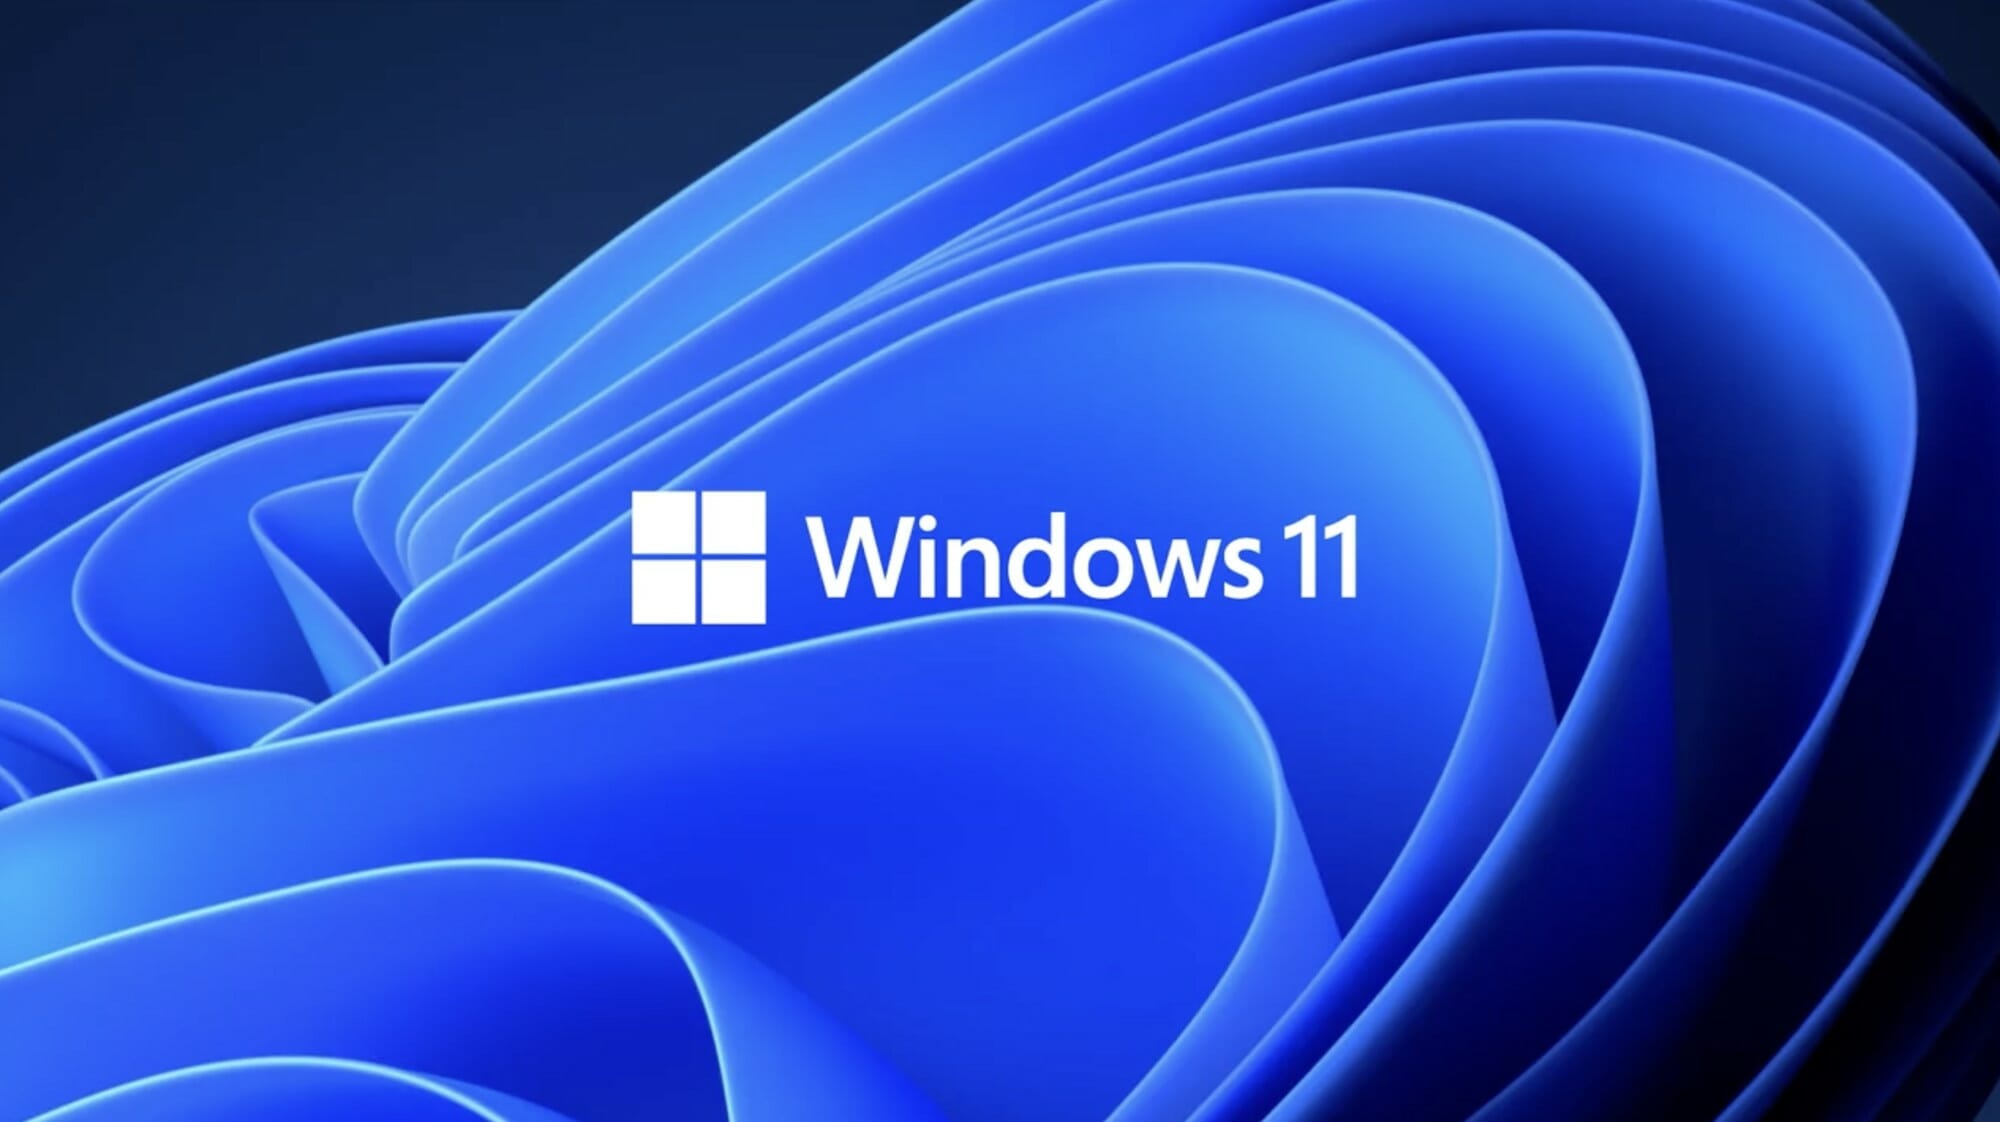 How to apply custom wallpapers on virtual desktops in Windows 11